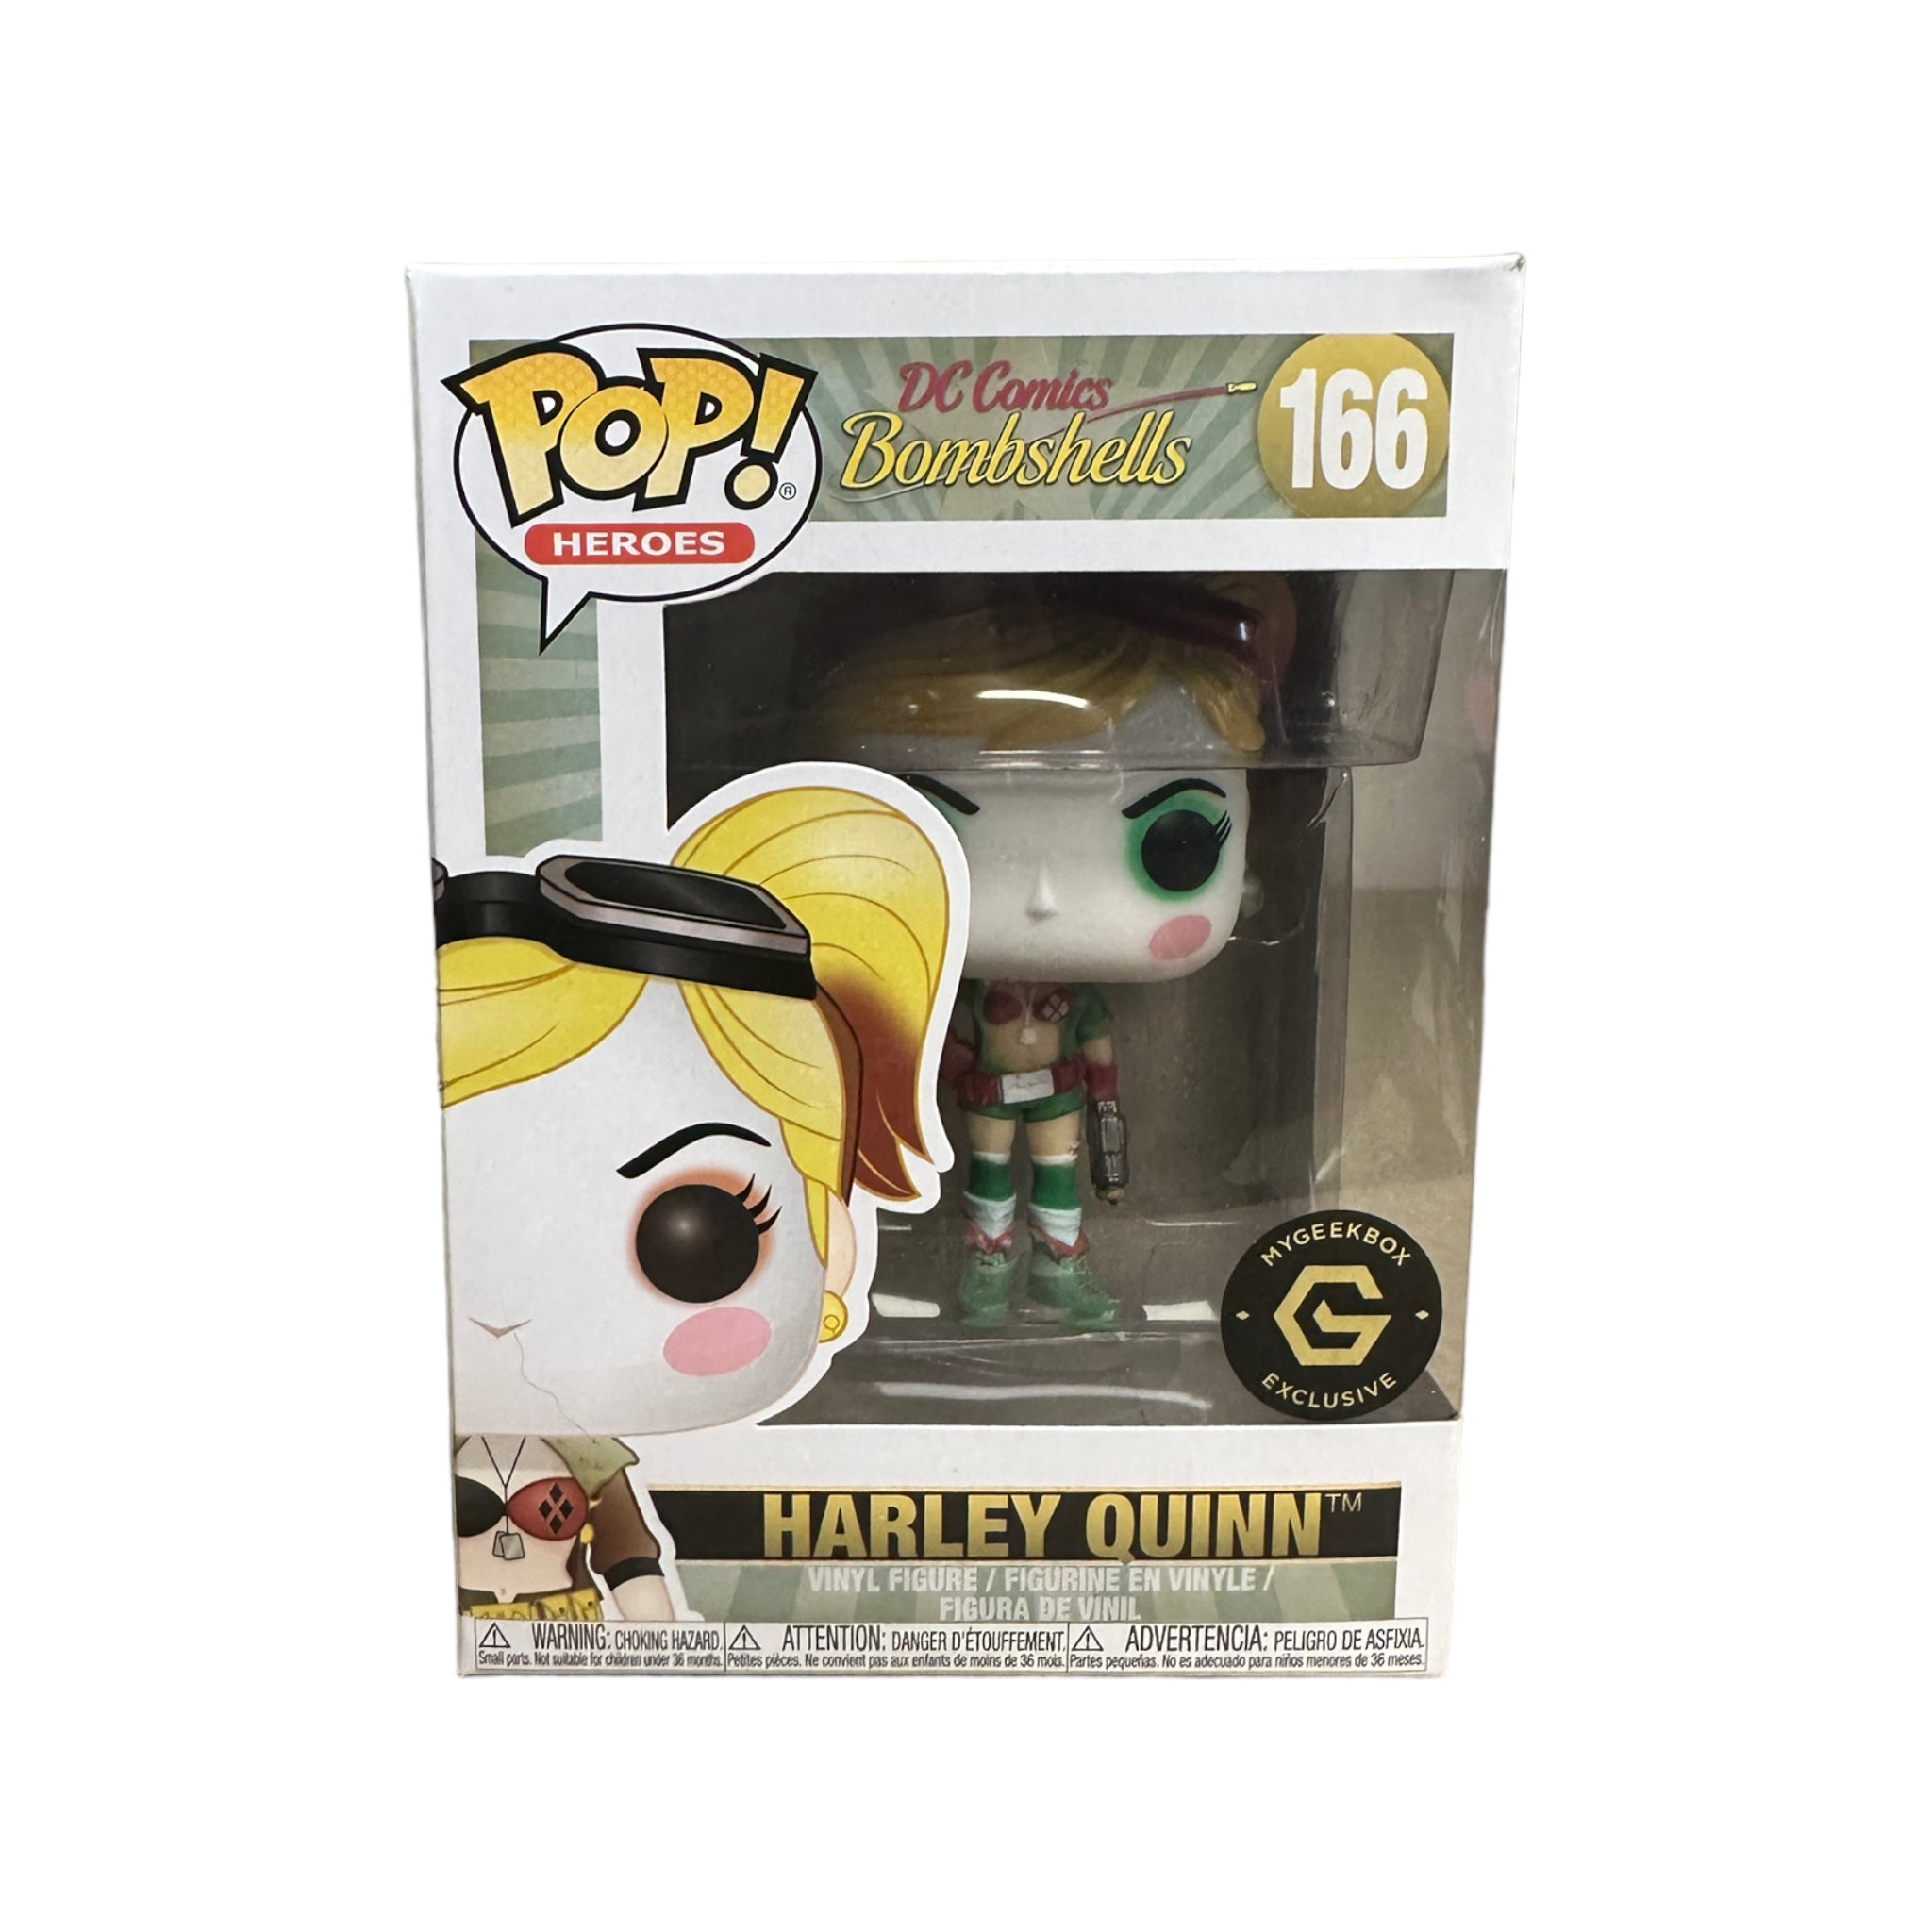 Harley Quinn #166 Funko Pop! - DC Bombshells - My Geek Box Exclusive - Condition 8.75/10